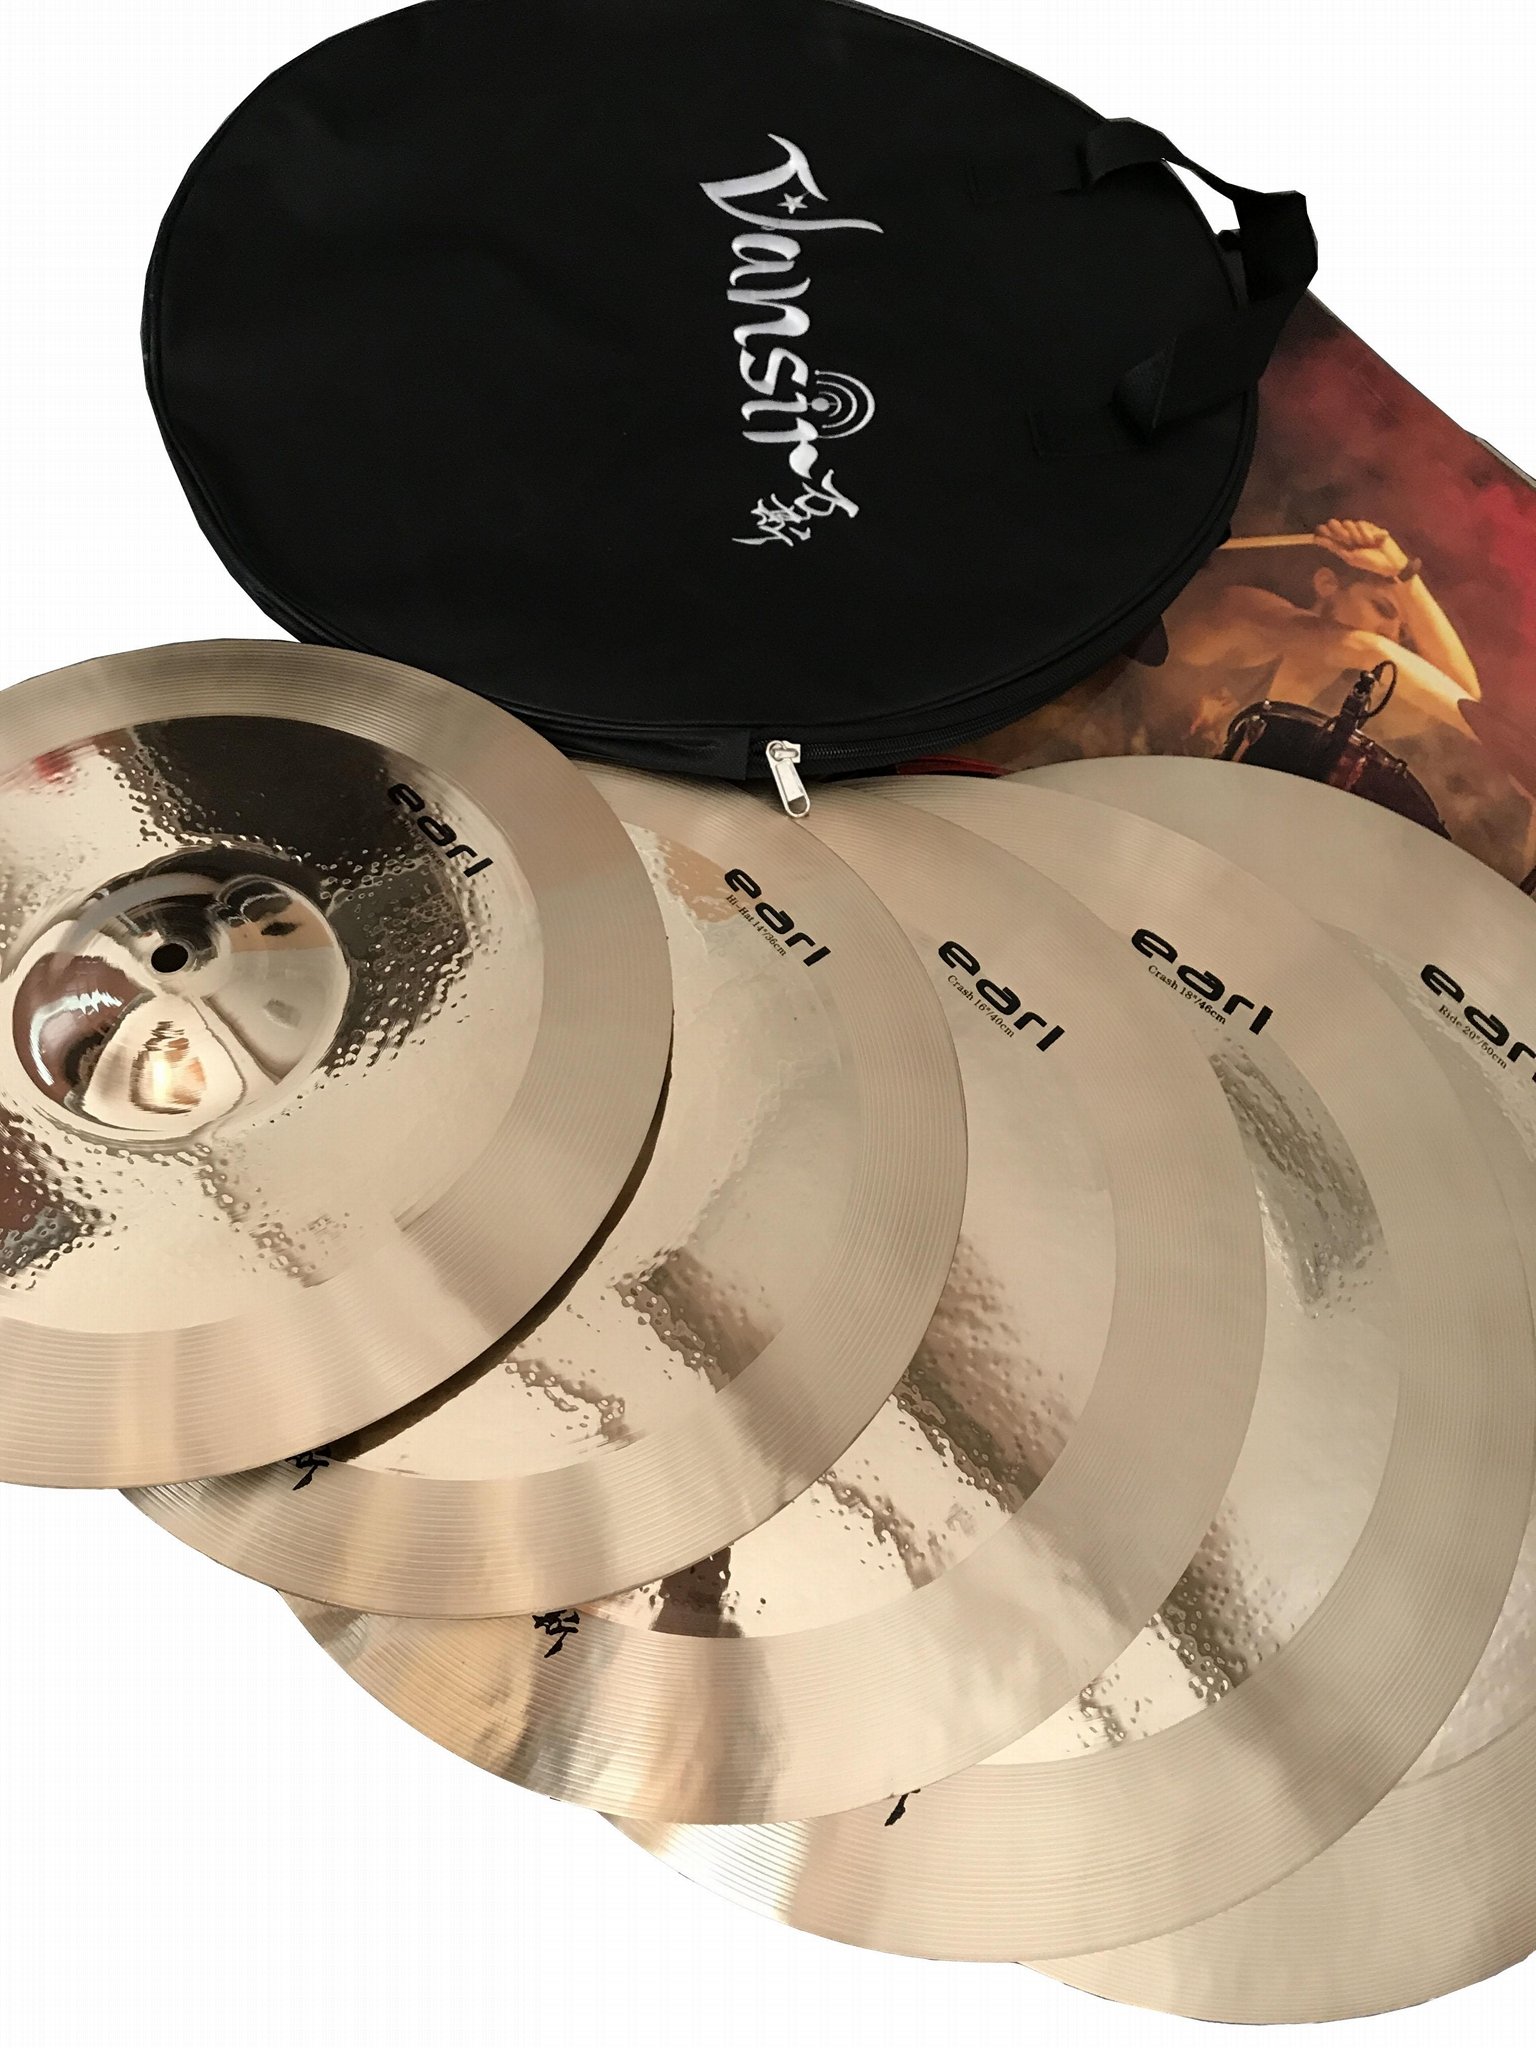 Vansir Hand Hammered B20 Drum Cymbals for Drum Kit 5